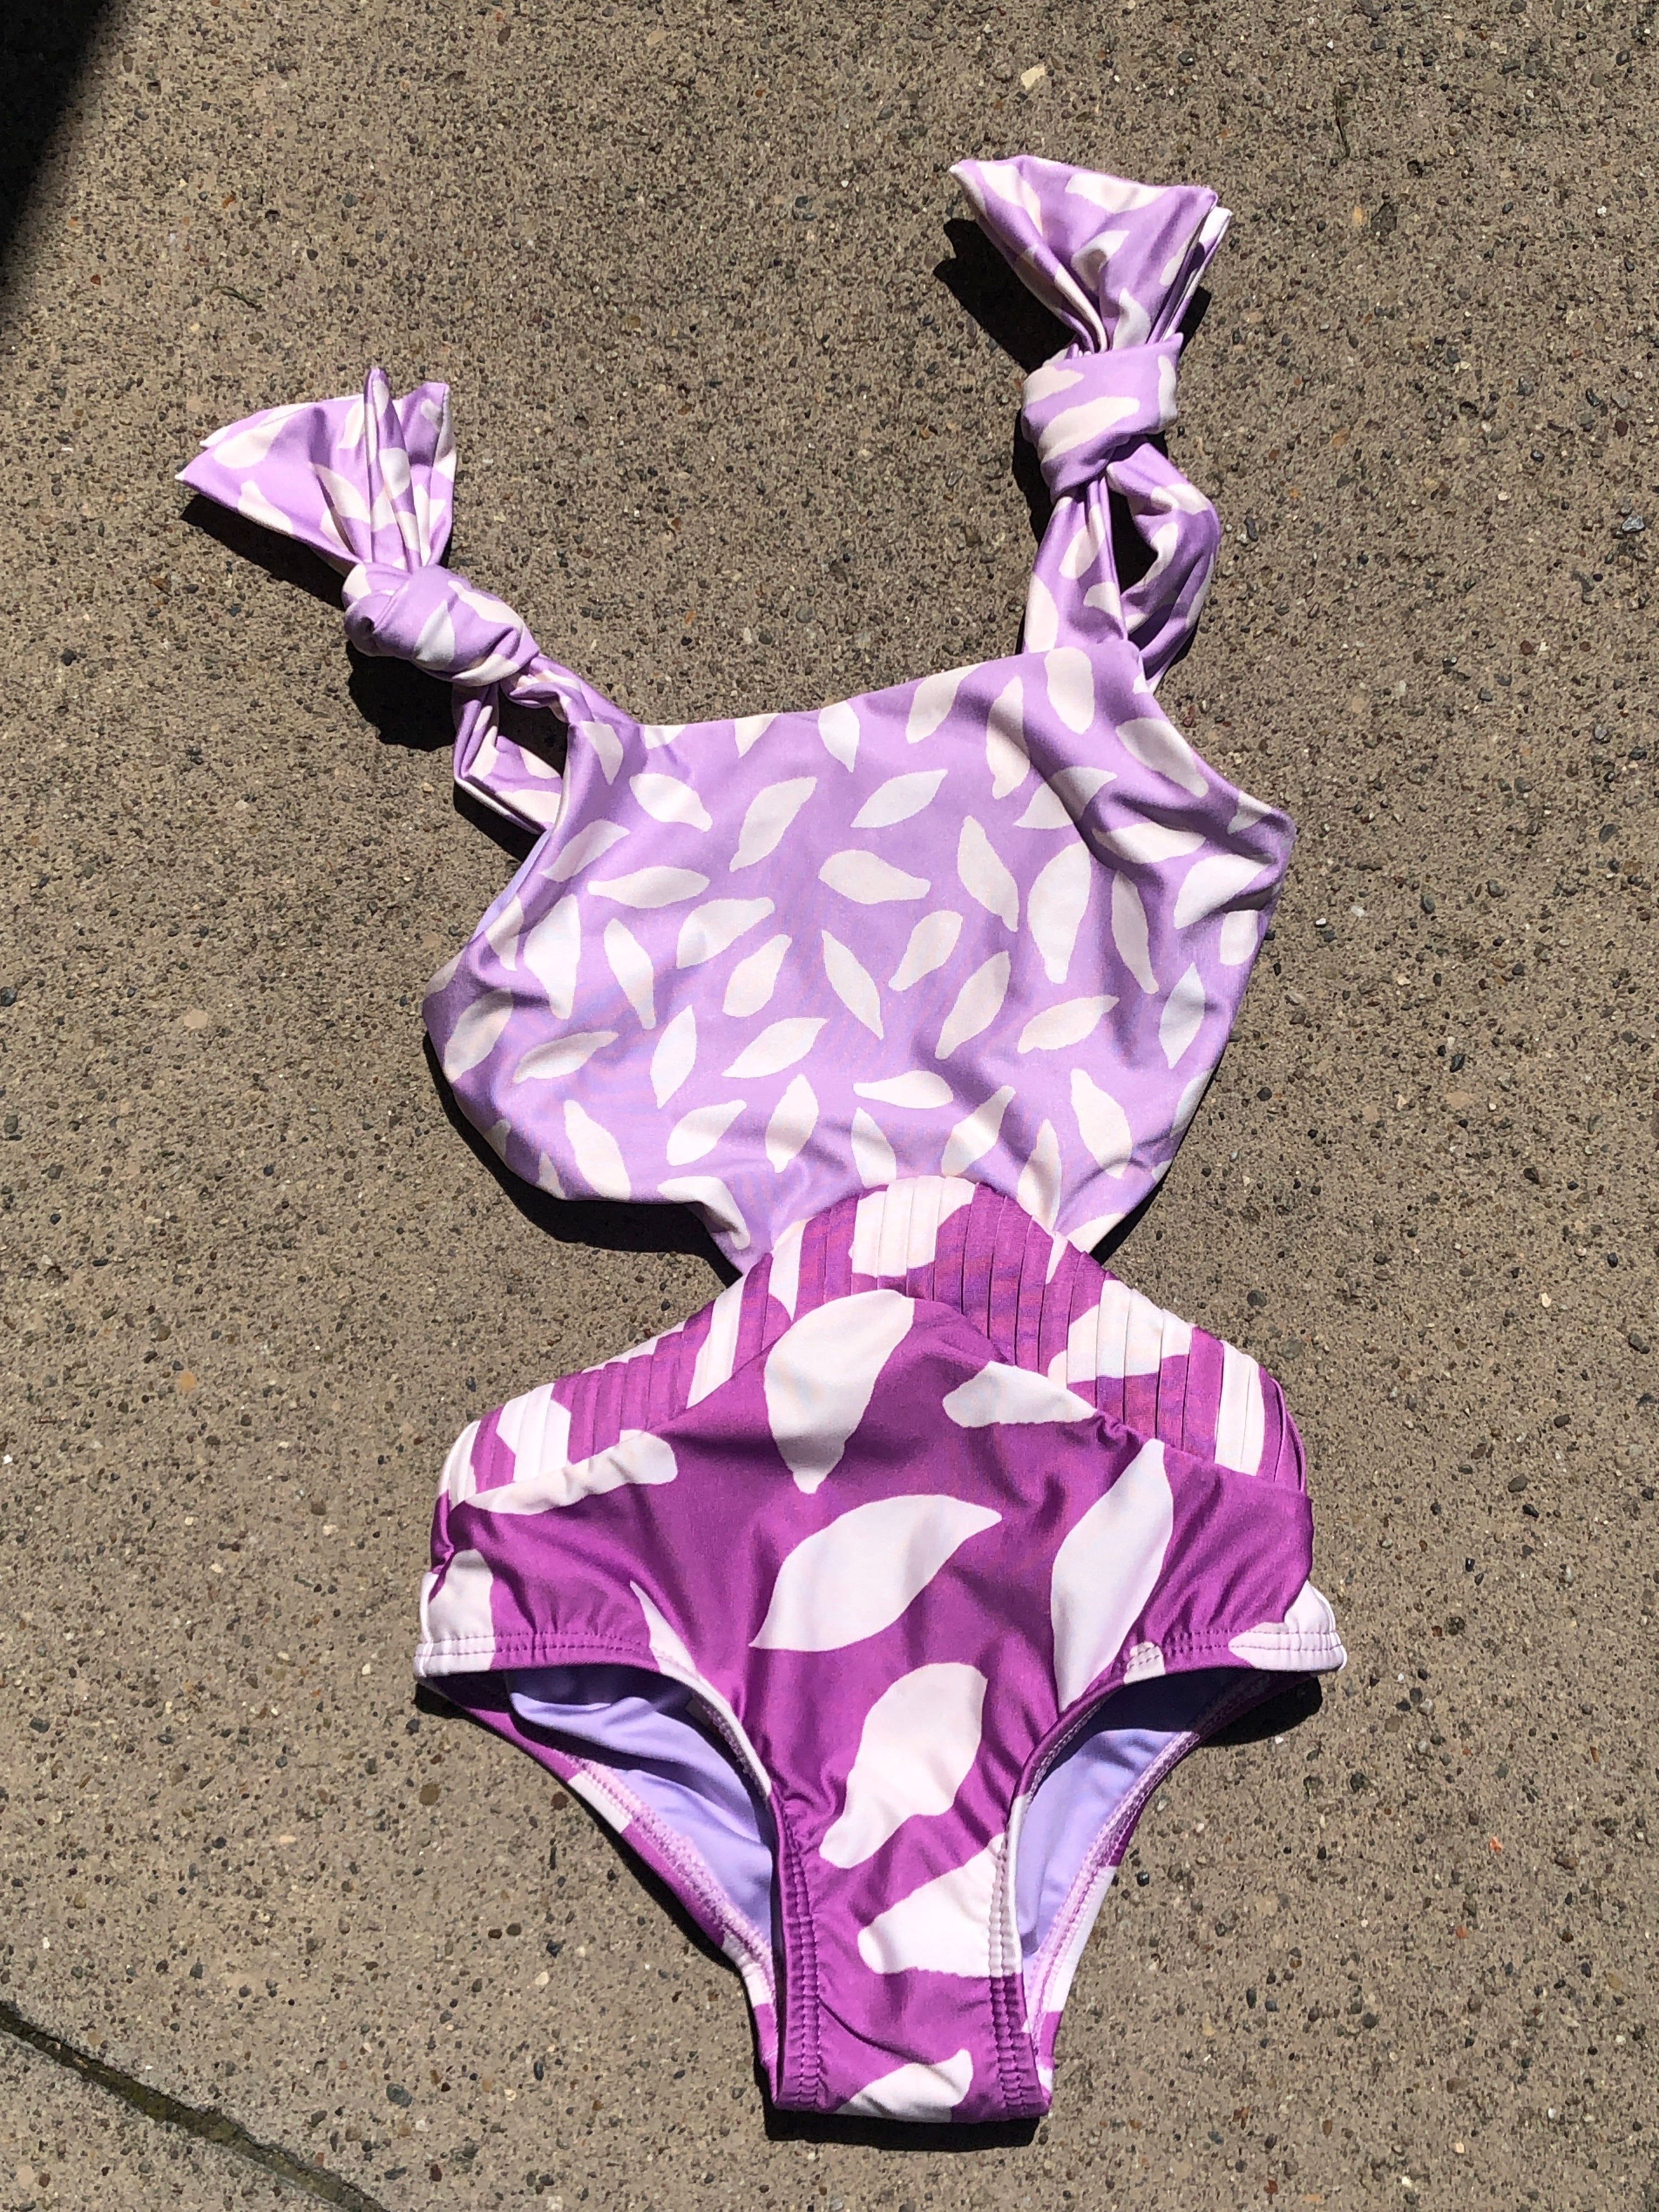 purple and white leaf print kids monokini one piece swimsuit